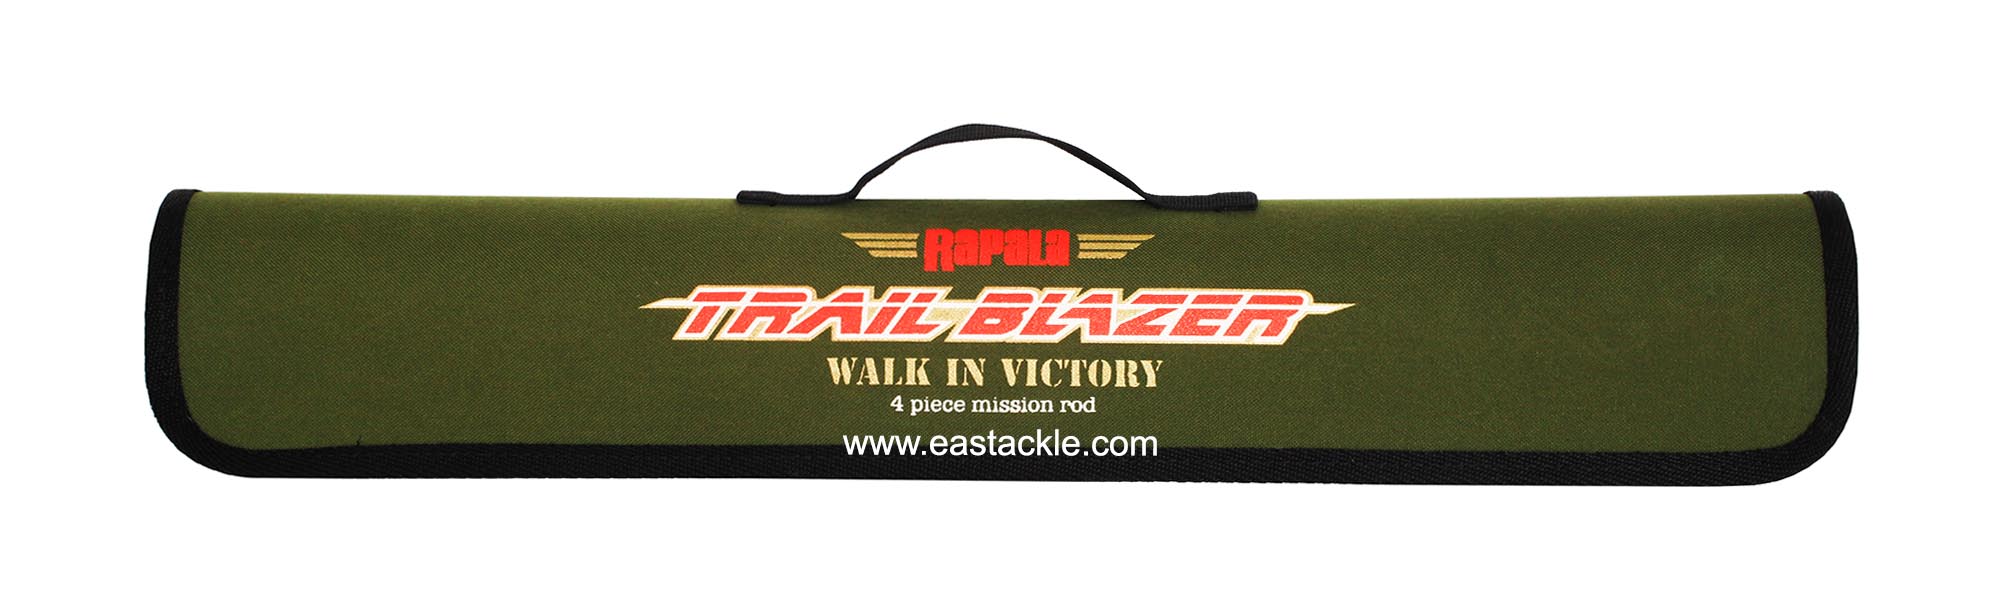 Rapala - Trail Blazer - TRS664MHRF - Spinning 4 Piece Travel Rod - Rod Bag | Eastackle